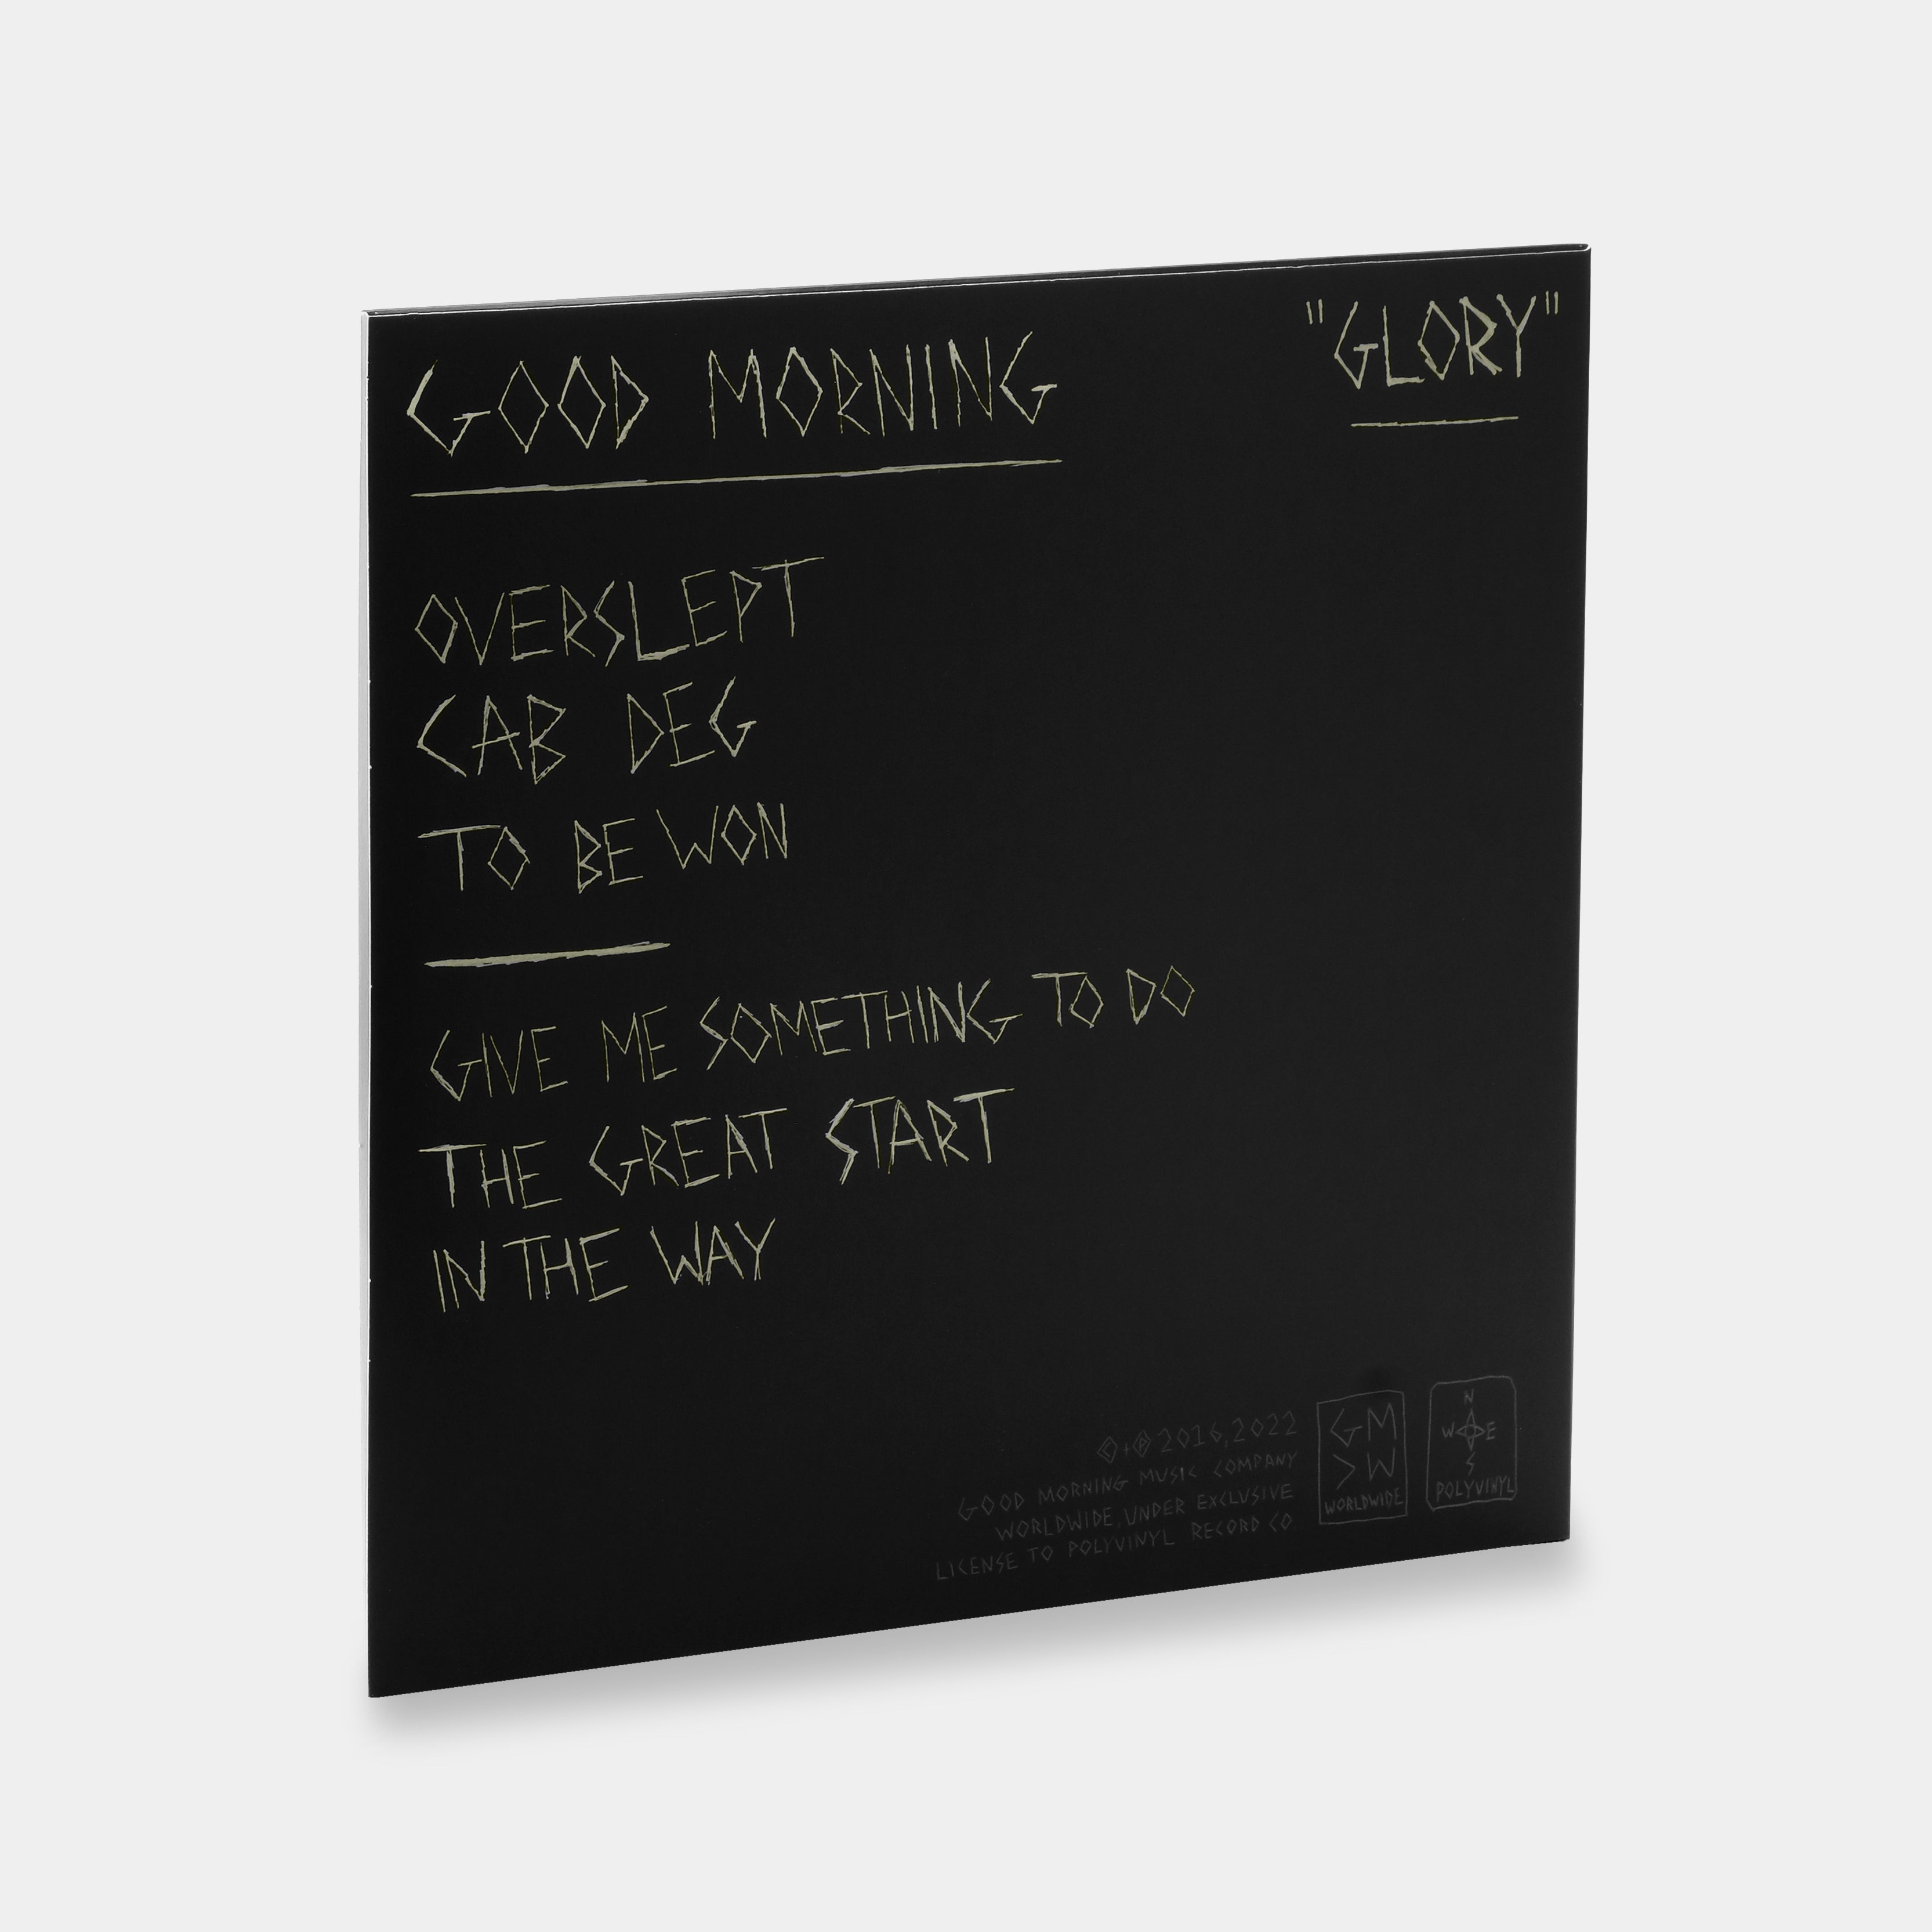 Good Morning - Glory LP Brown Vinyl Record